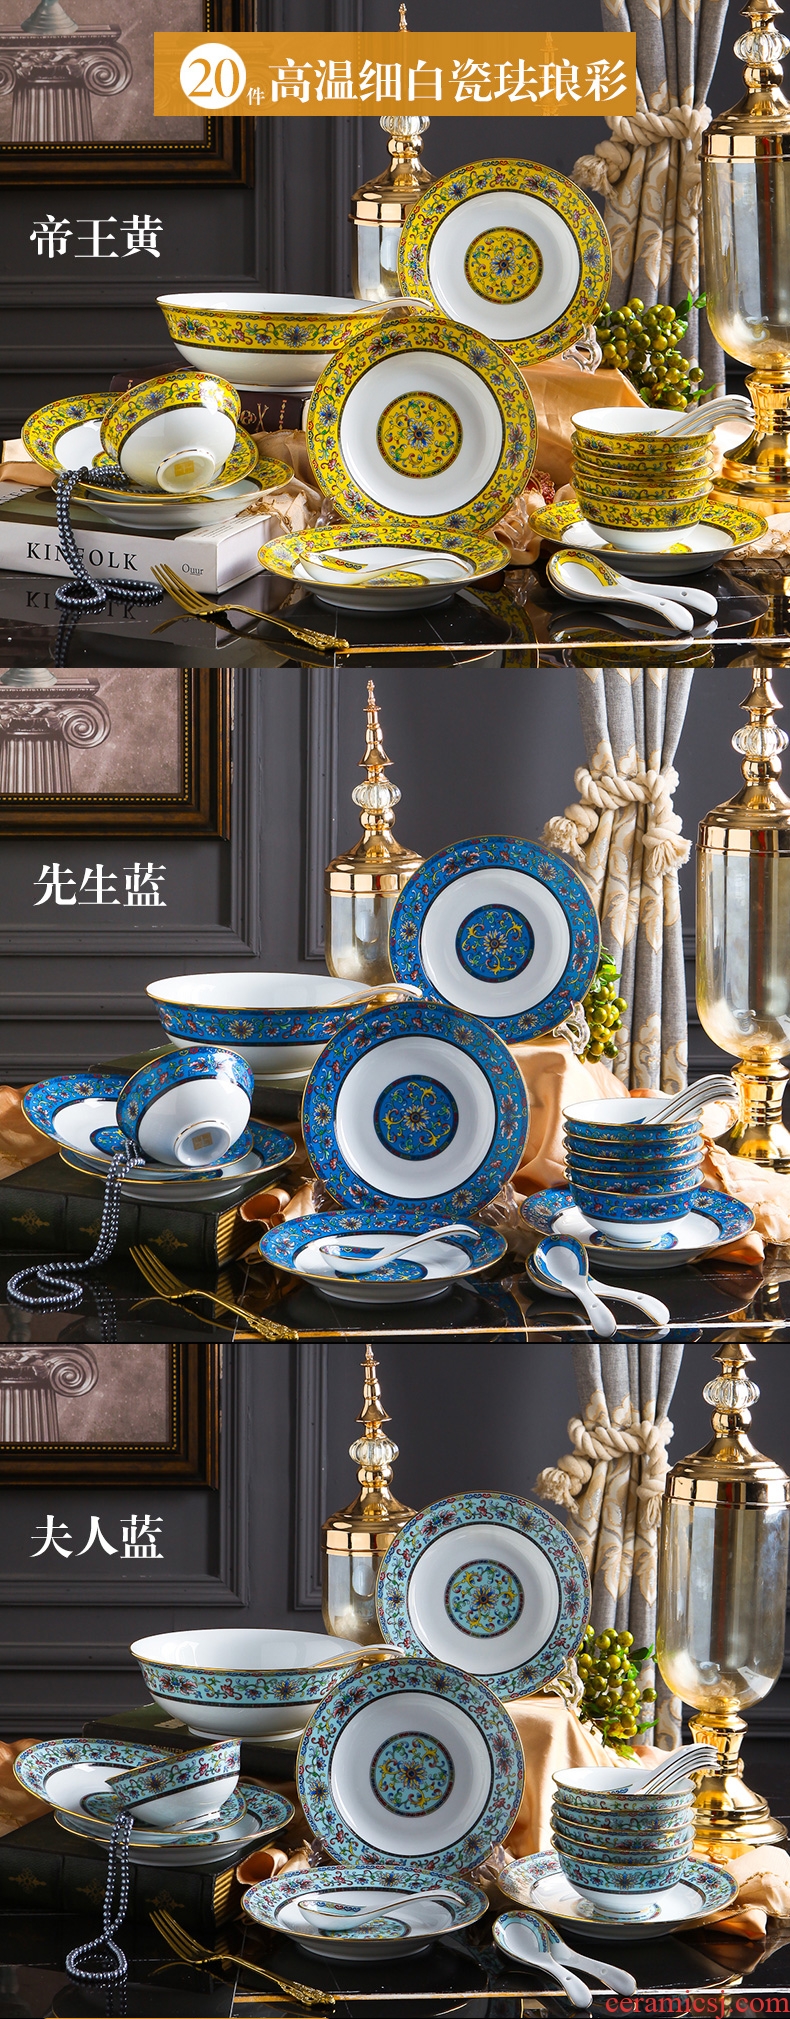 Red leaves tableware jingdezhen ceramic bowl sets court wind ceramic bowl chopsticks dishes porcelain tableware